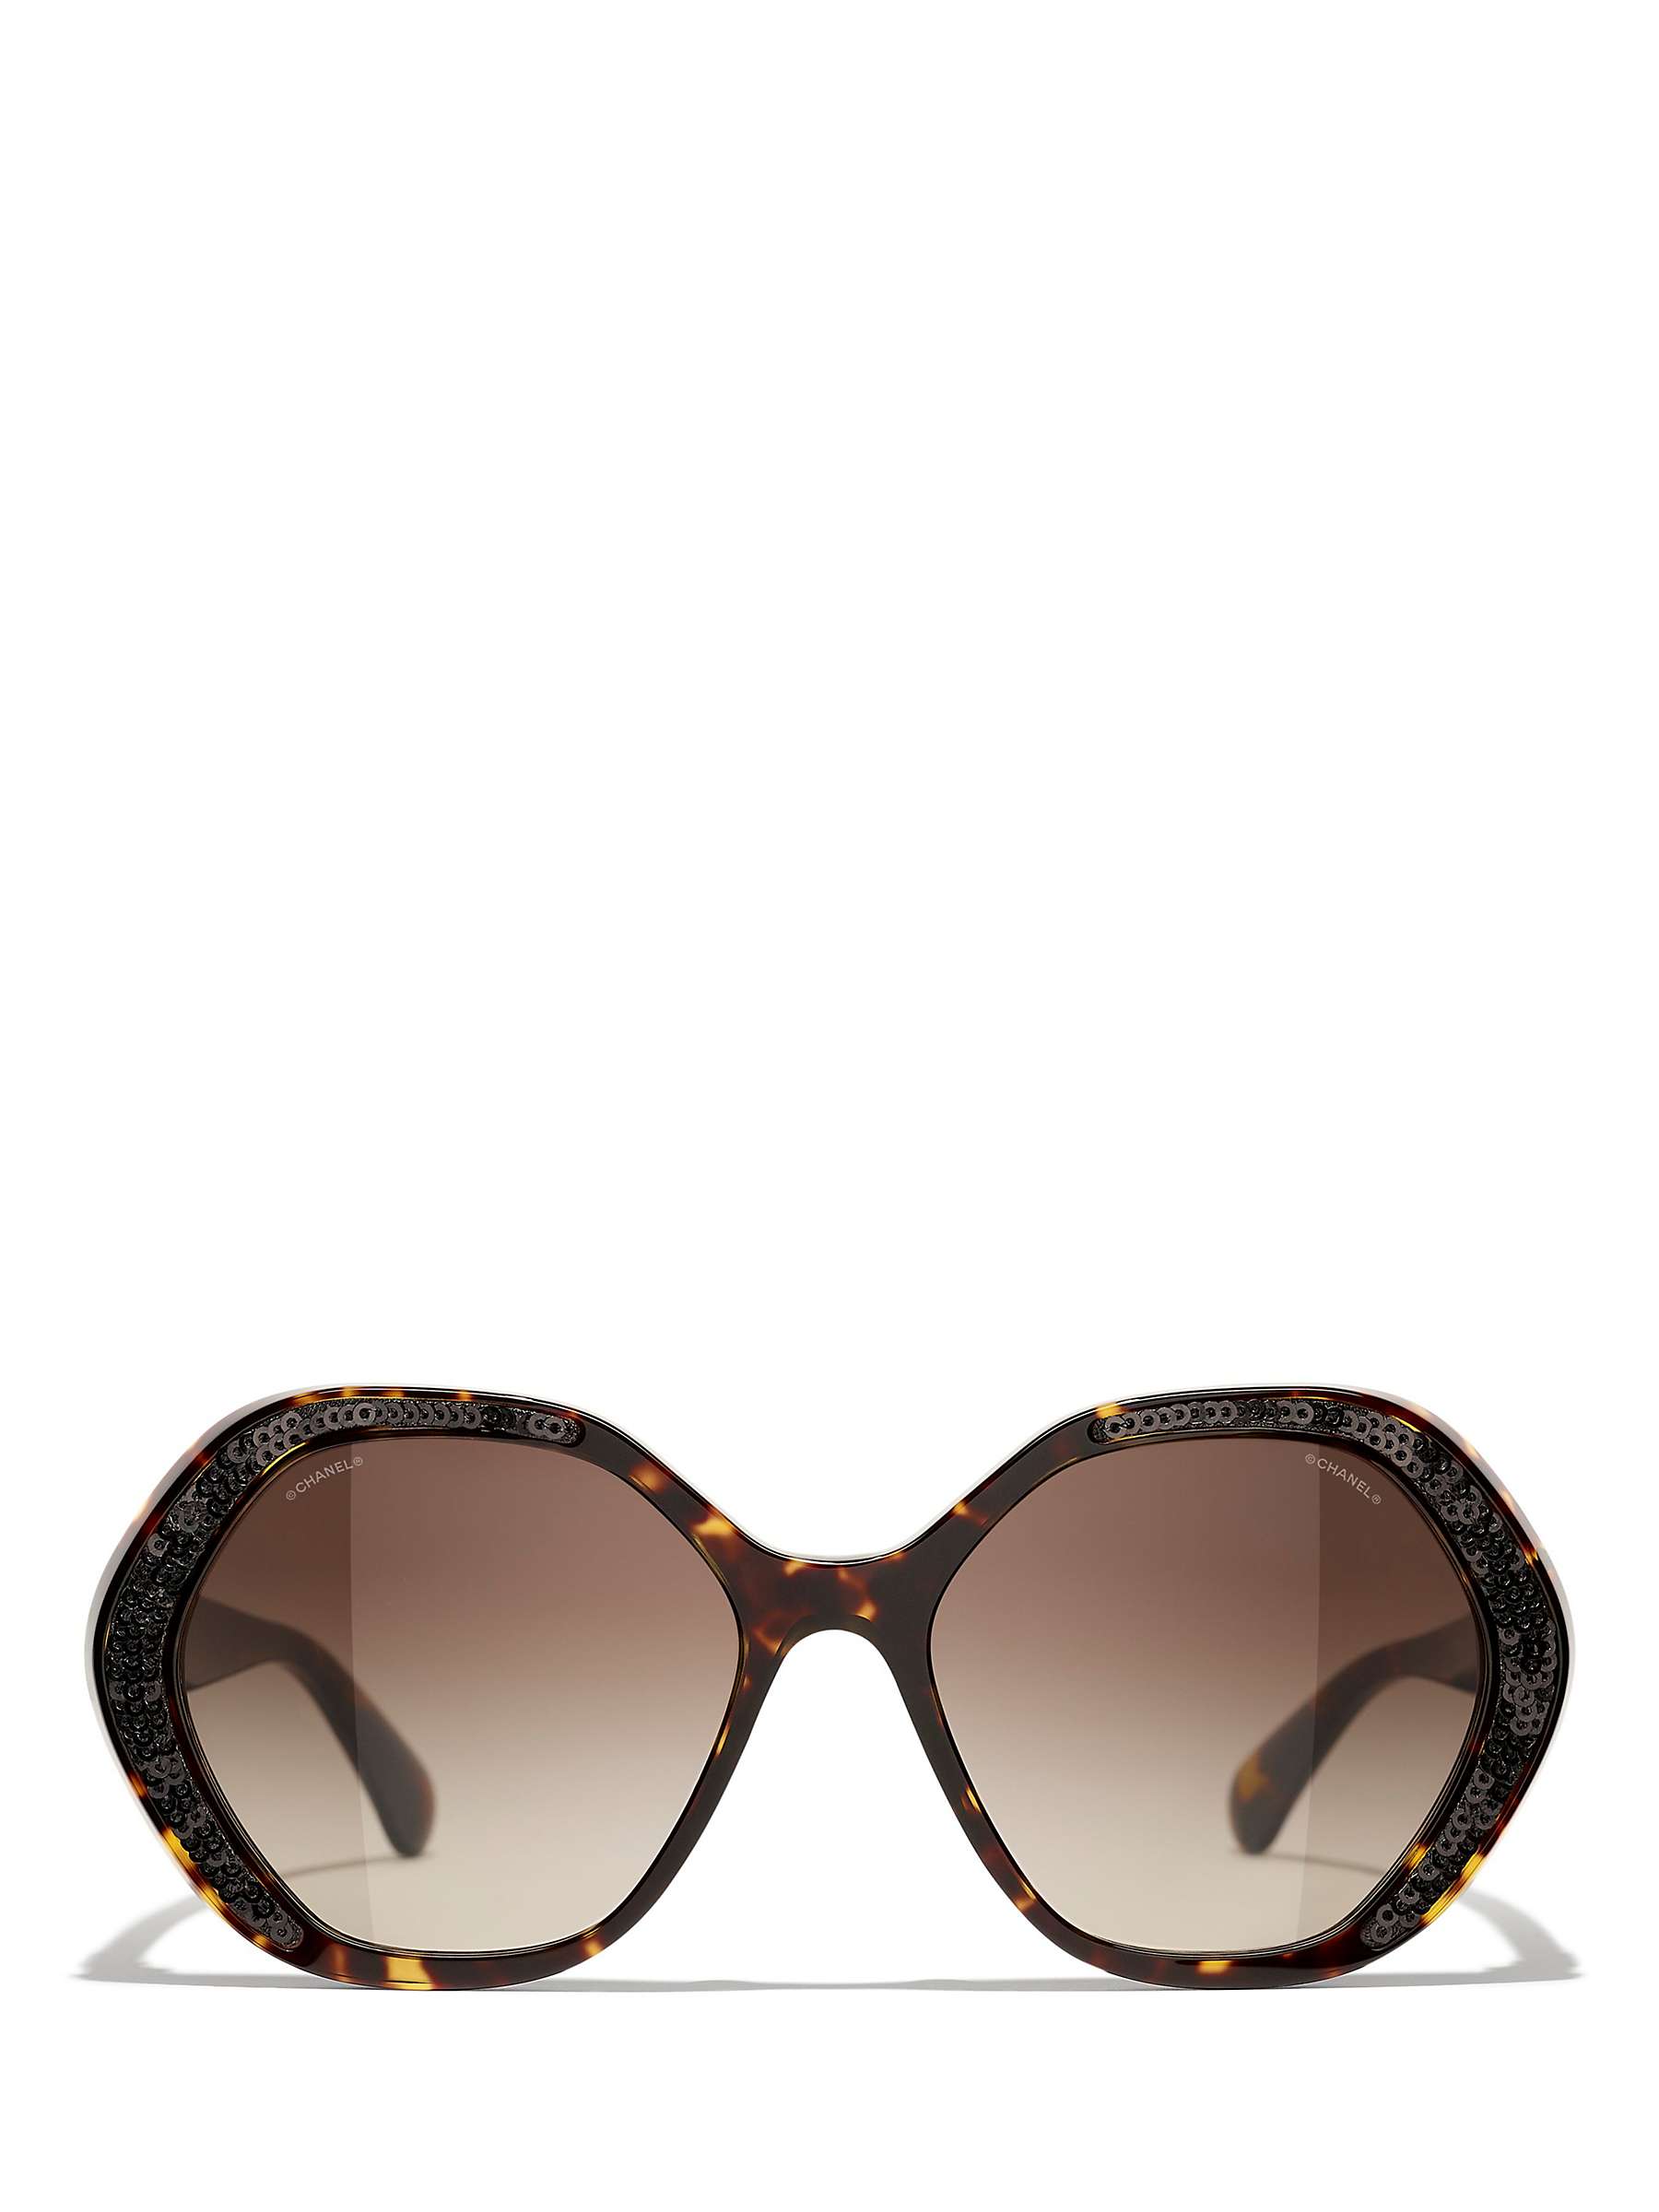 Buy CHANEL Irregular Sunglasses CH5451 Shiny Tortoise/Brown Gradient Online at johnlewis.com